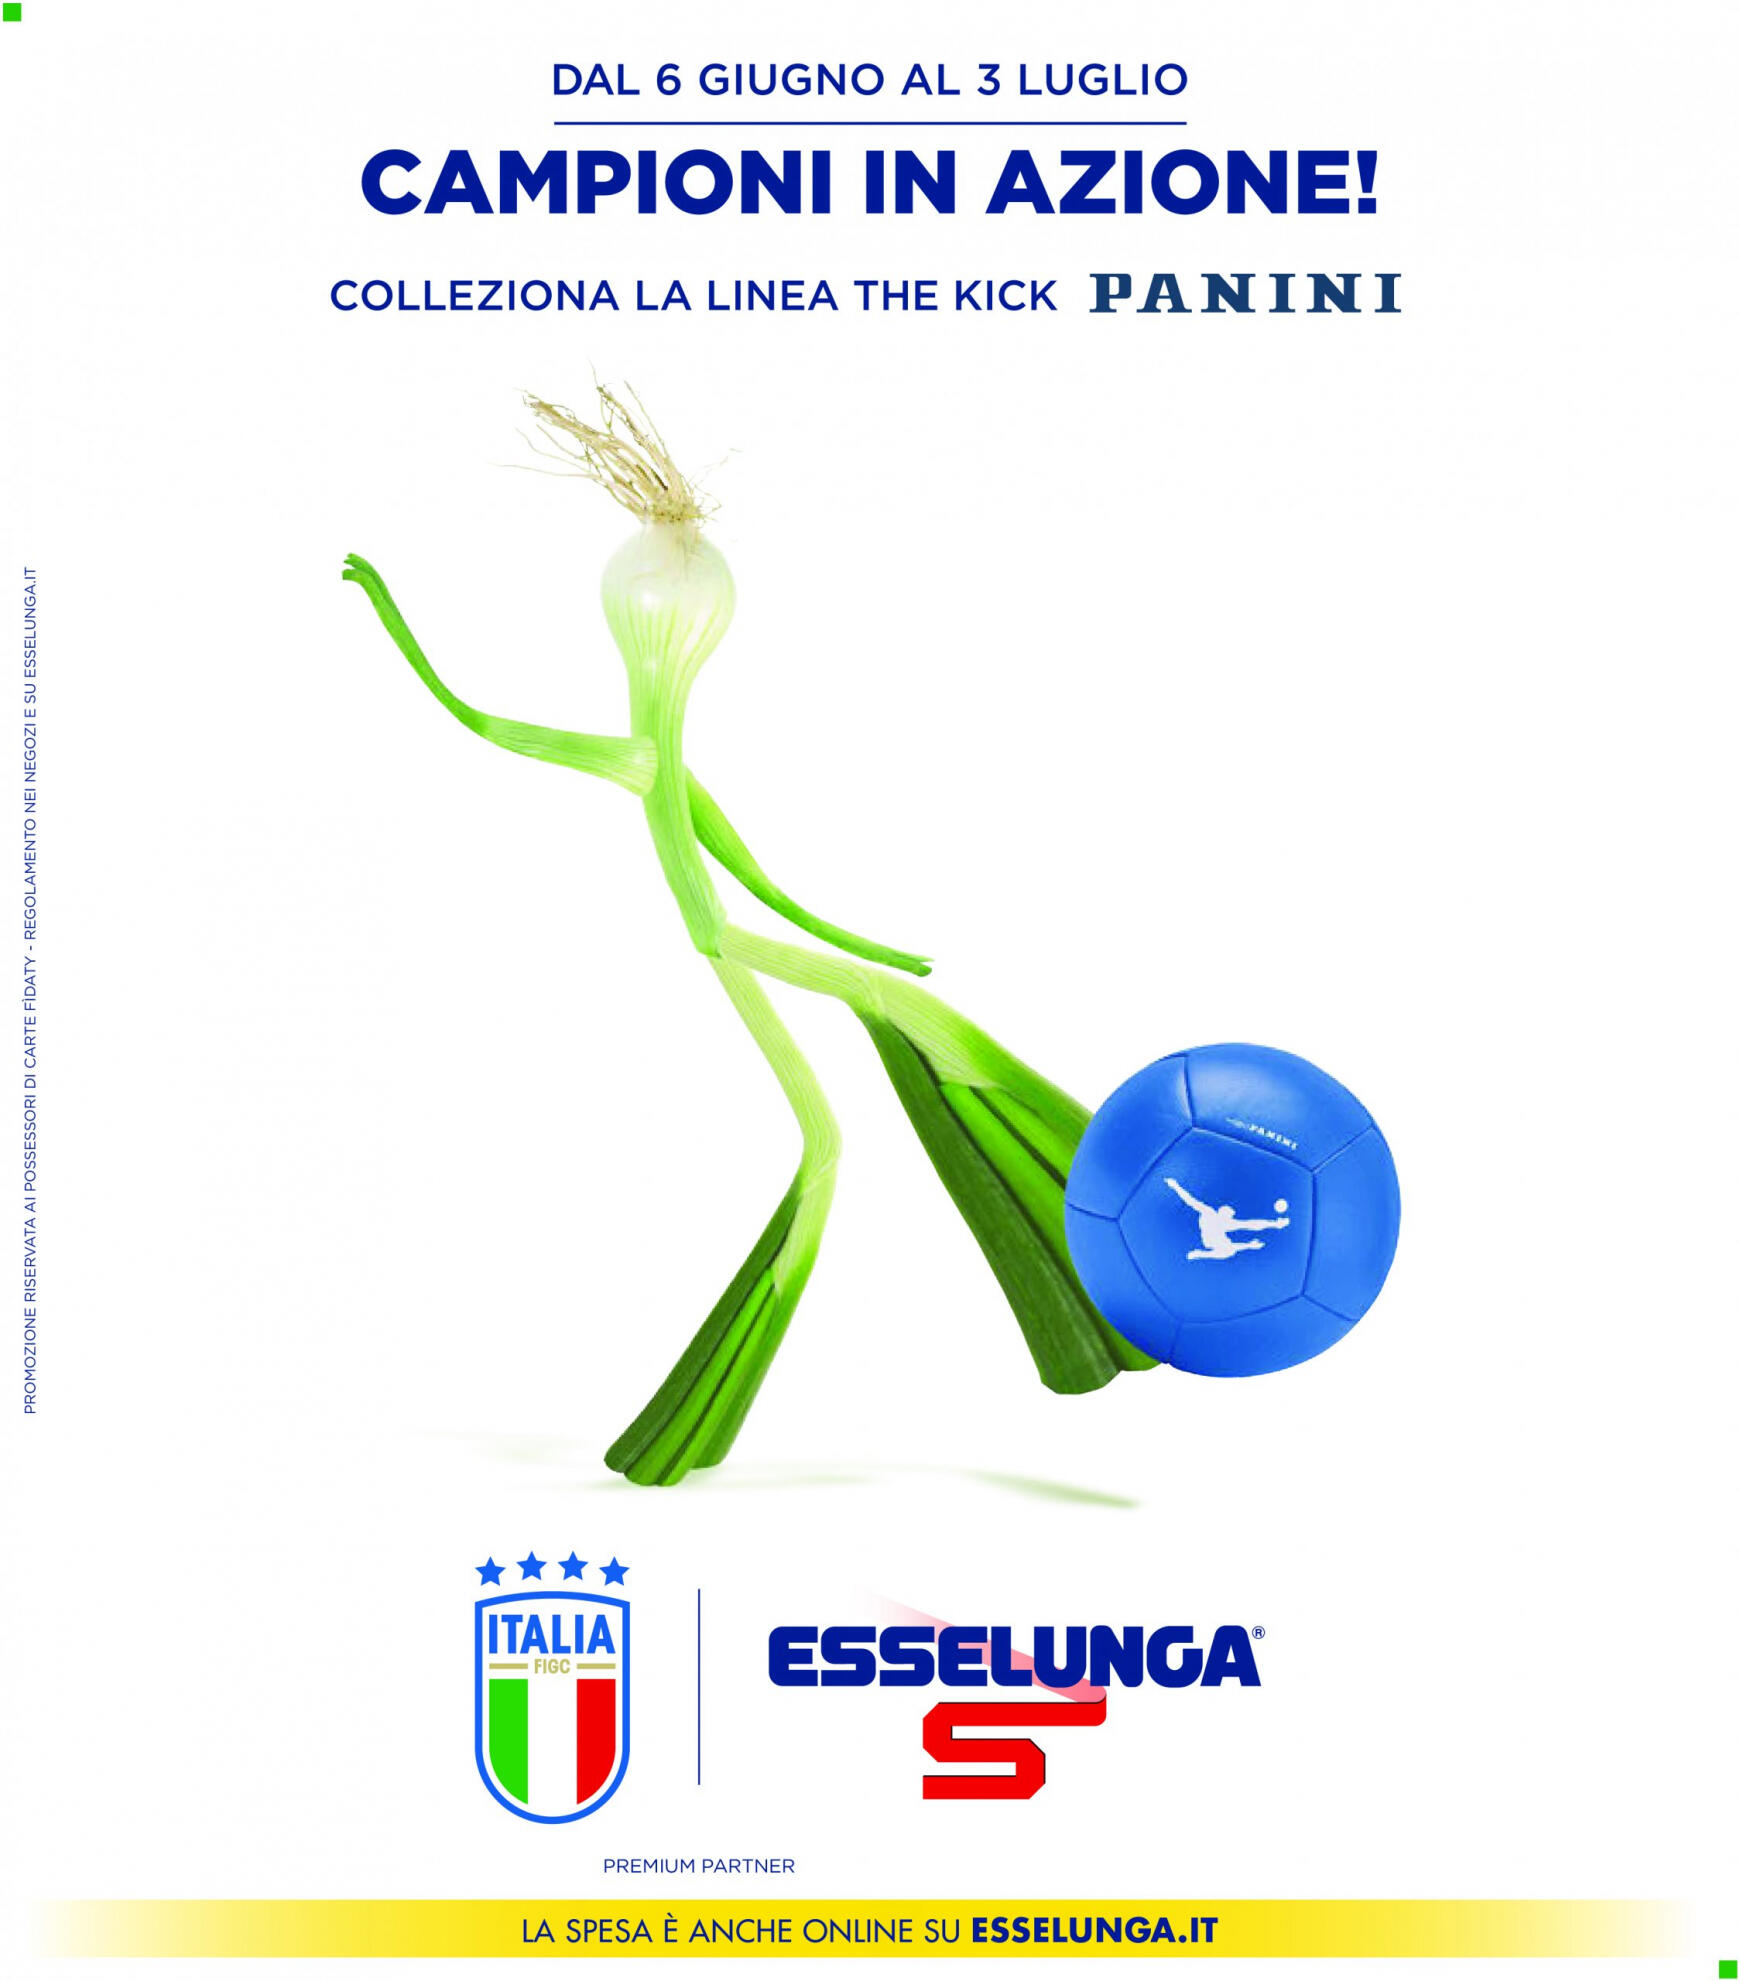 esselunga - Nuovo volantino Esselunga - Collezione The Kick Panini - 1° Appuntamento 06.06. - 19.06. - page: 1